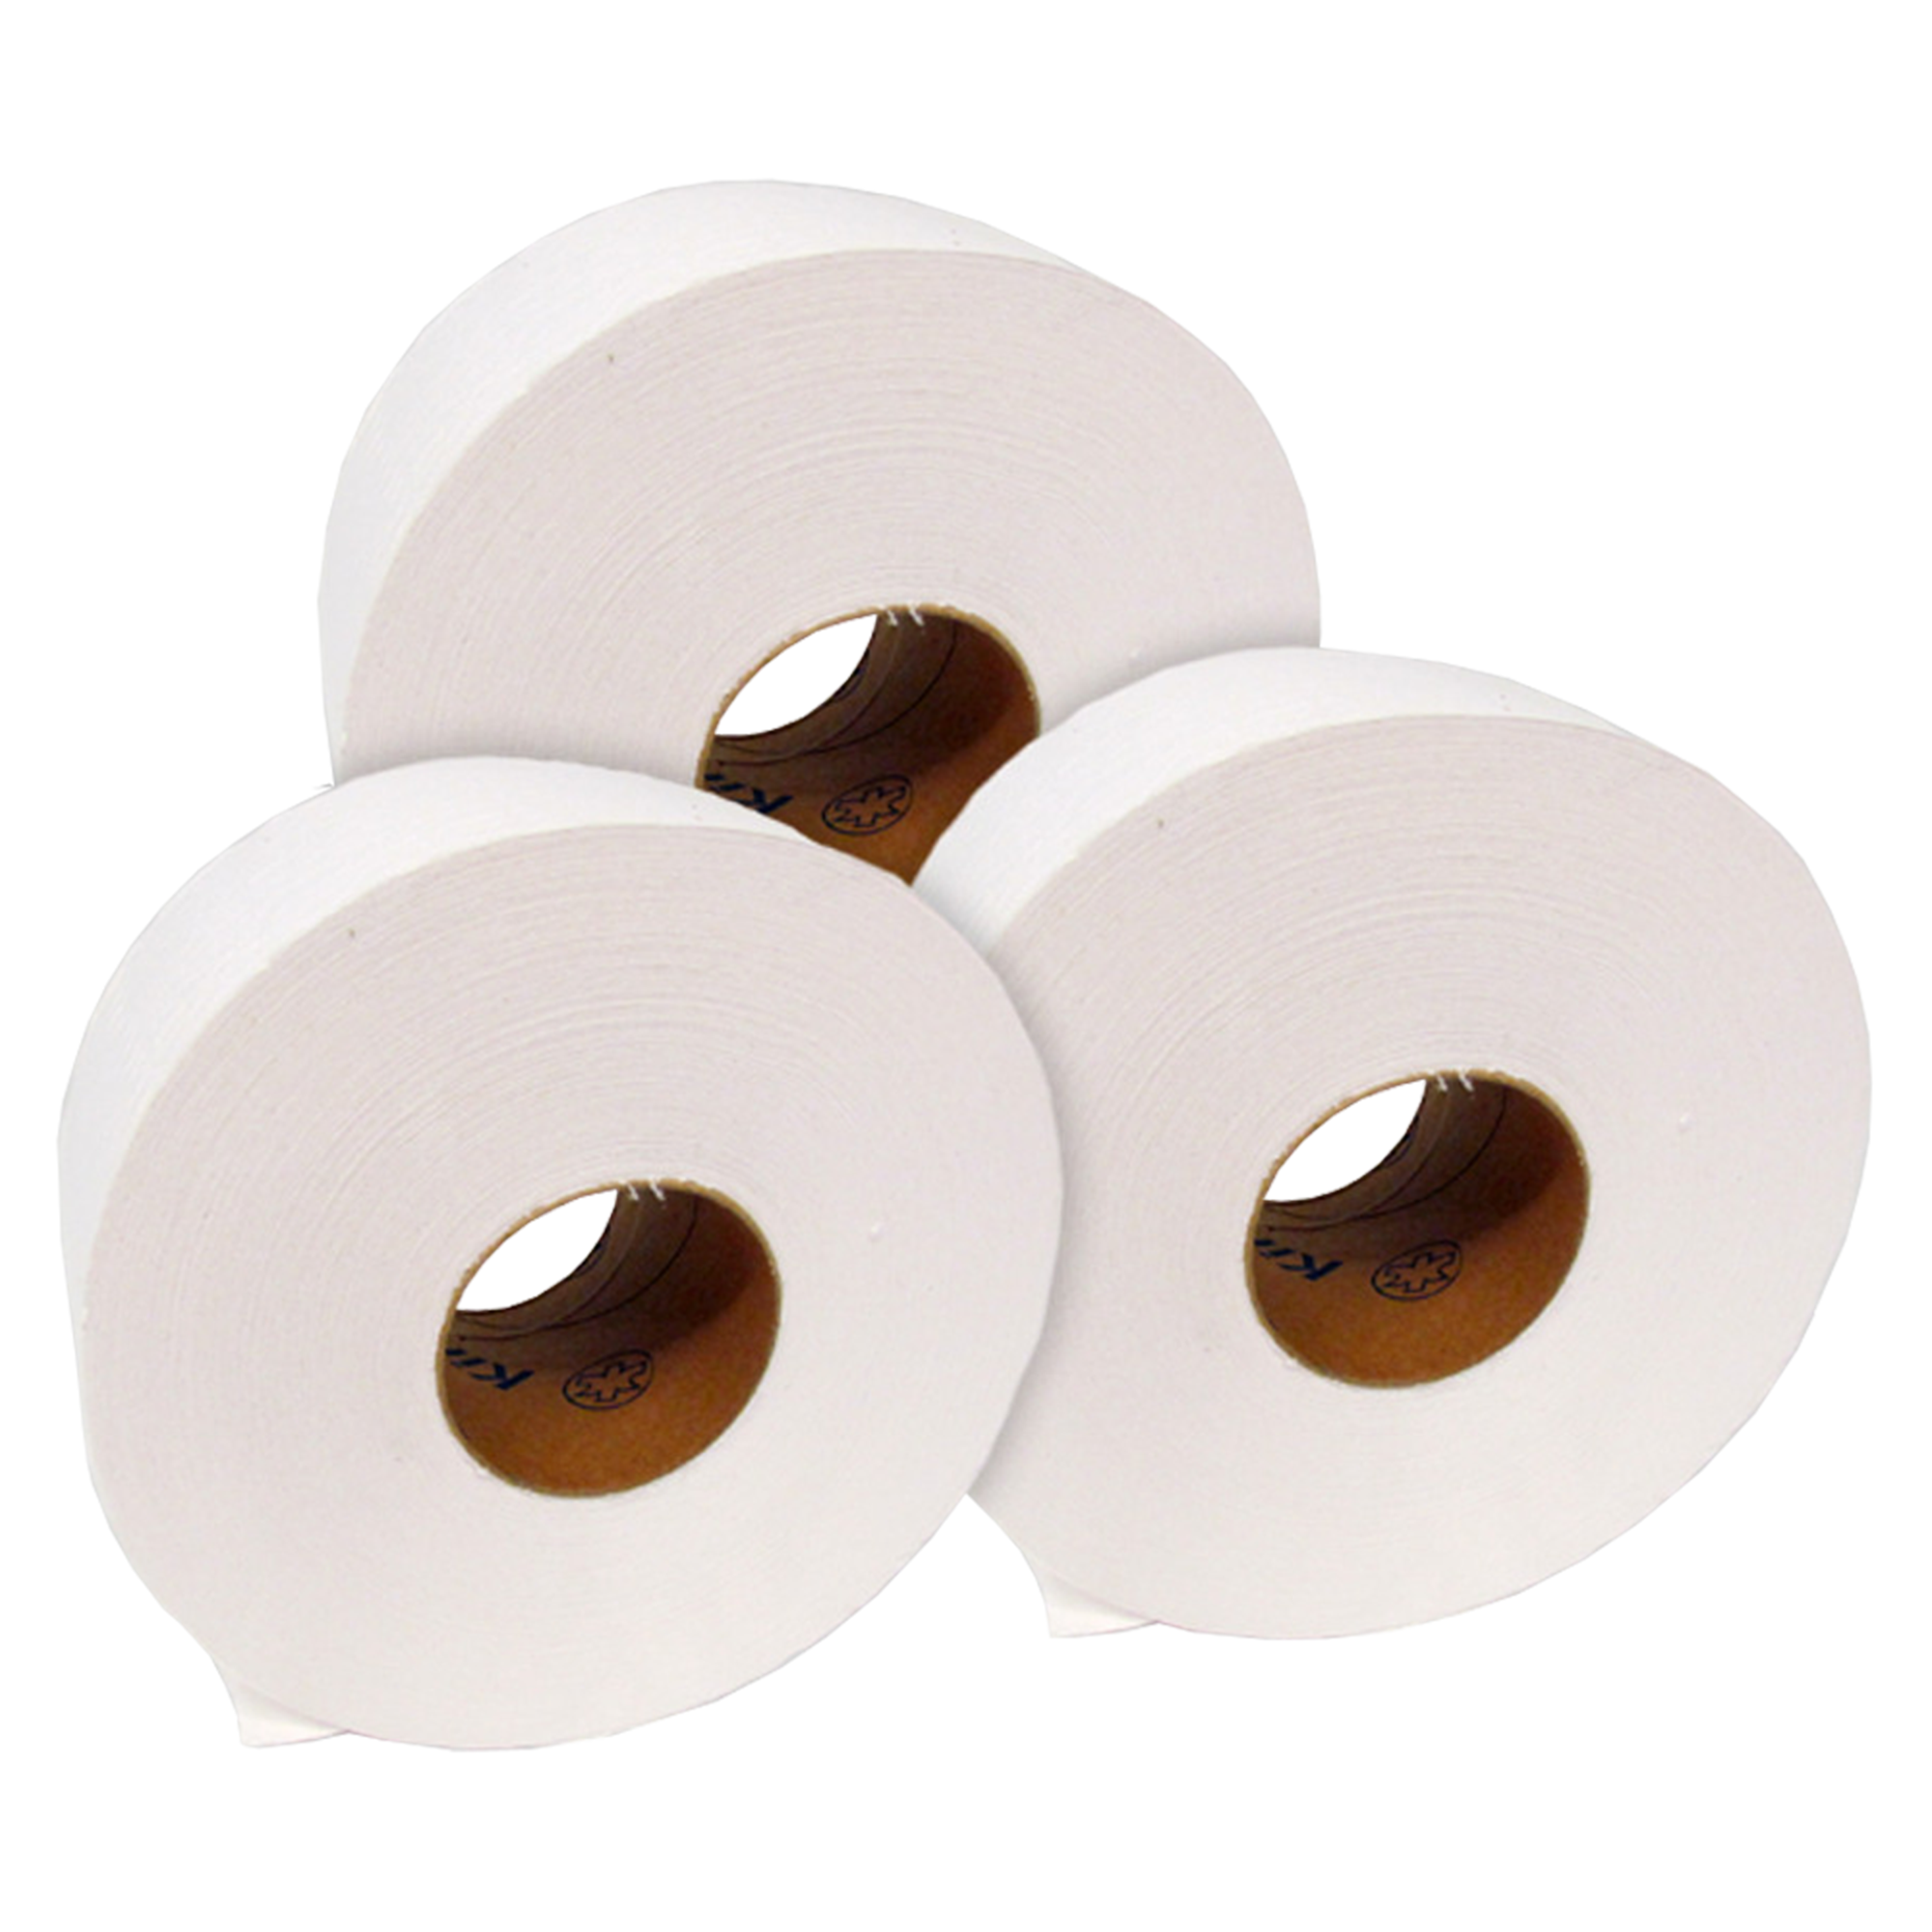 Higienico Jumbo Kleenex Jr 300 mts c 12 rls de 9.5 cm